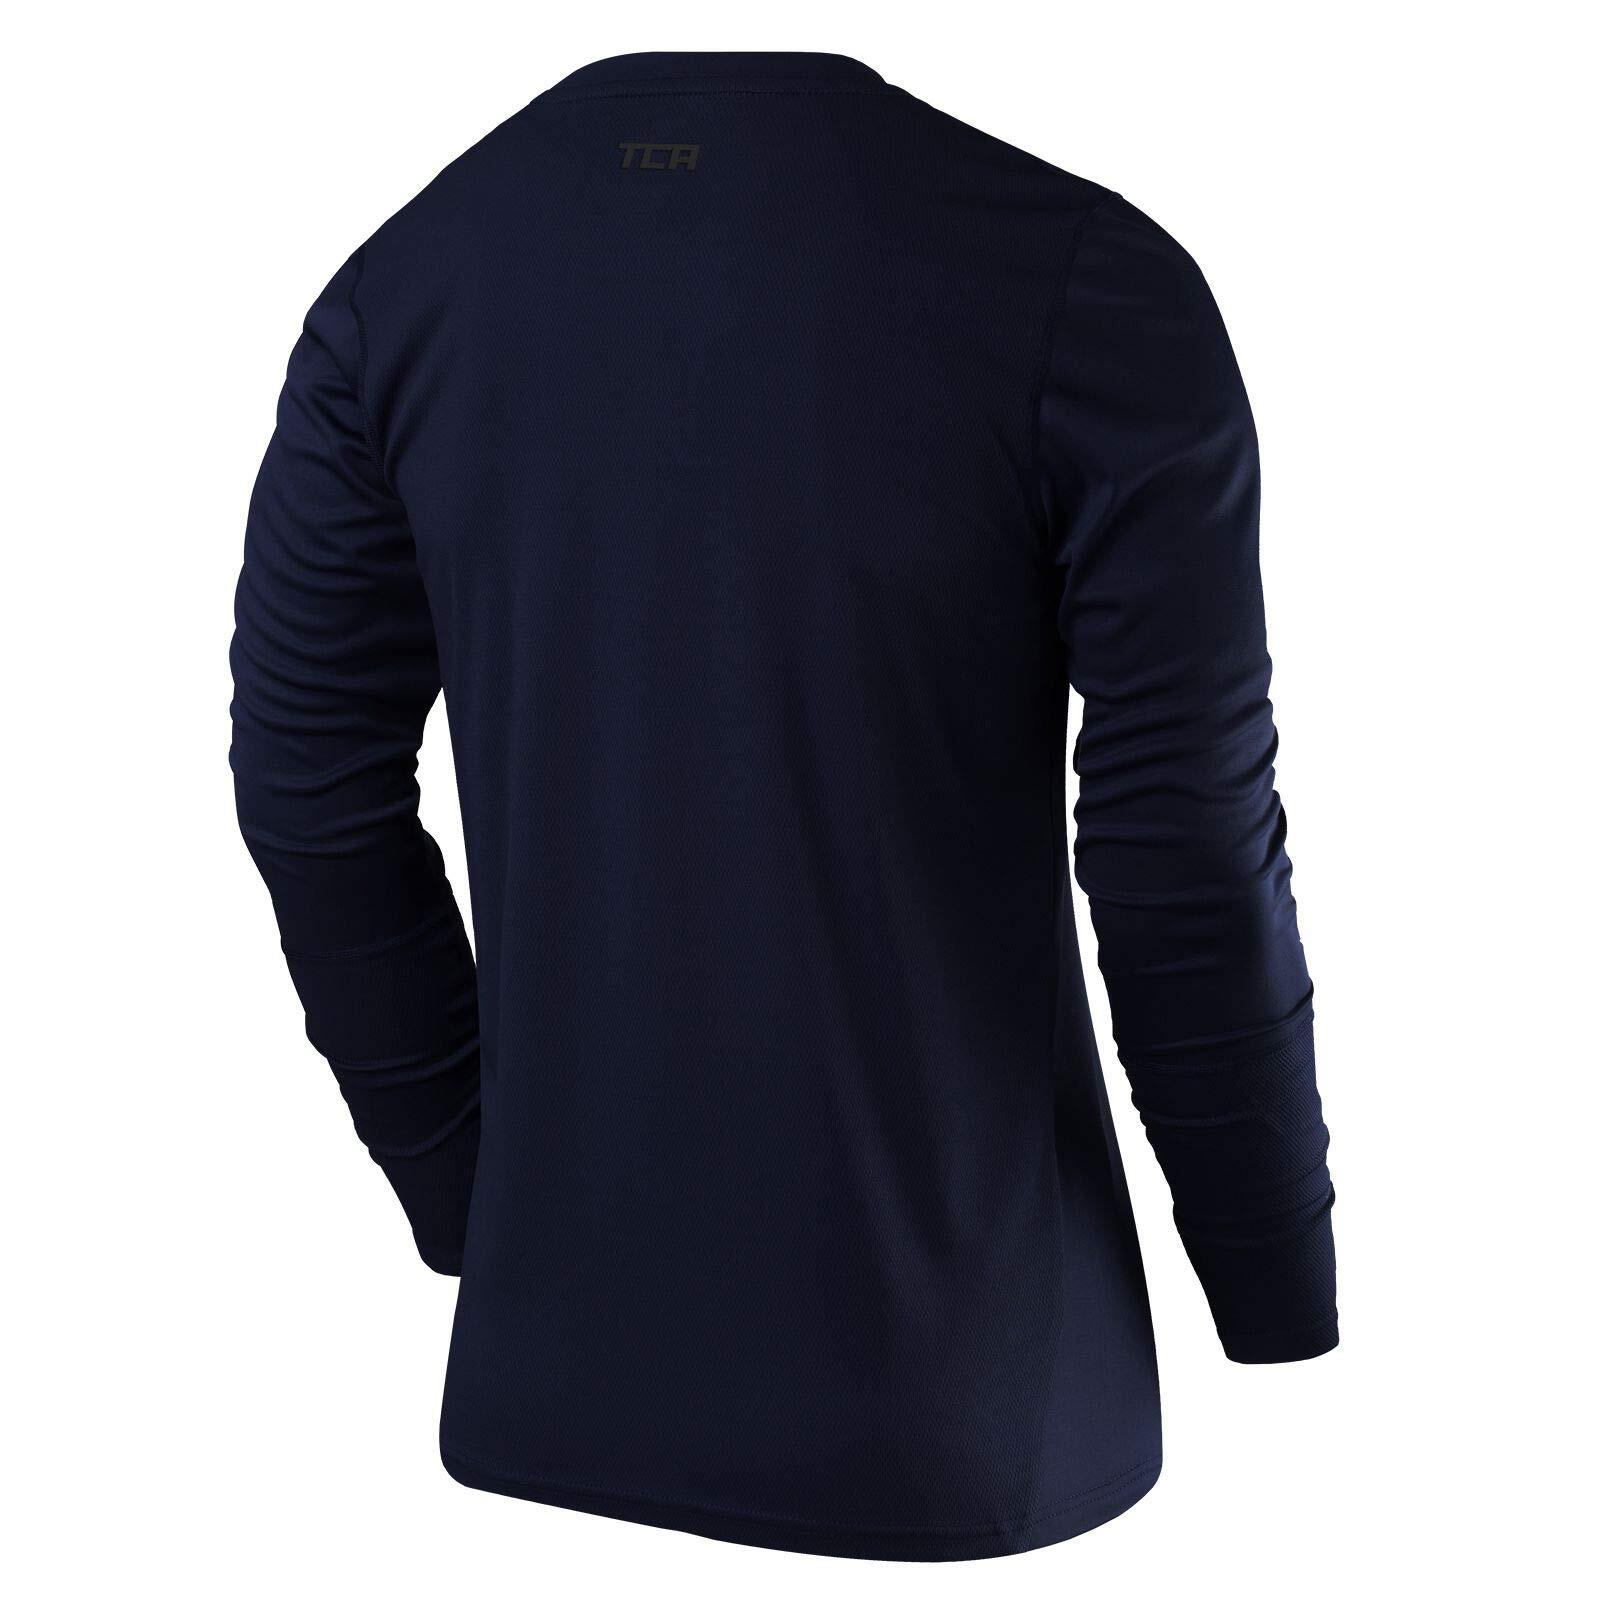 Men's Element Long Sleeve Quick Dry Running Top - Twilight Blue 2/5